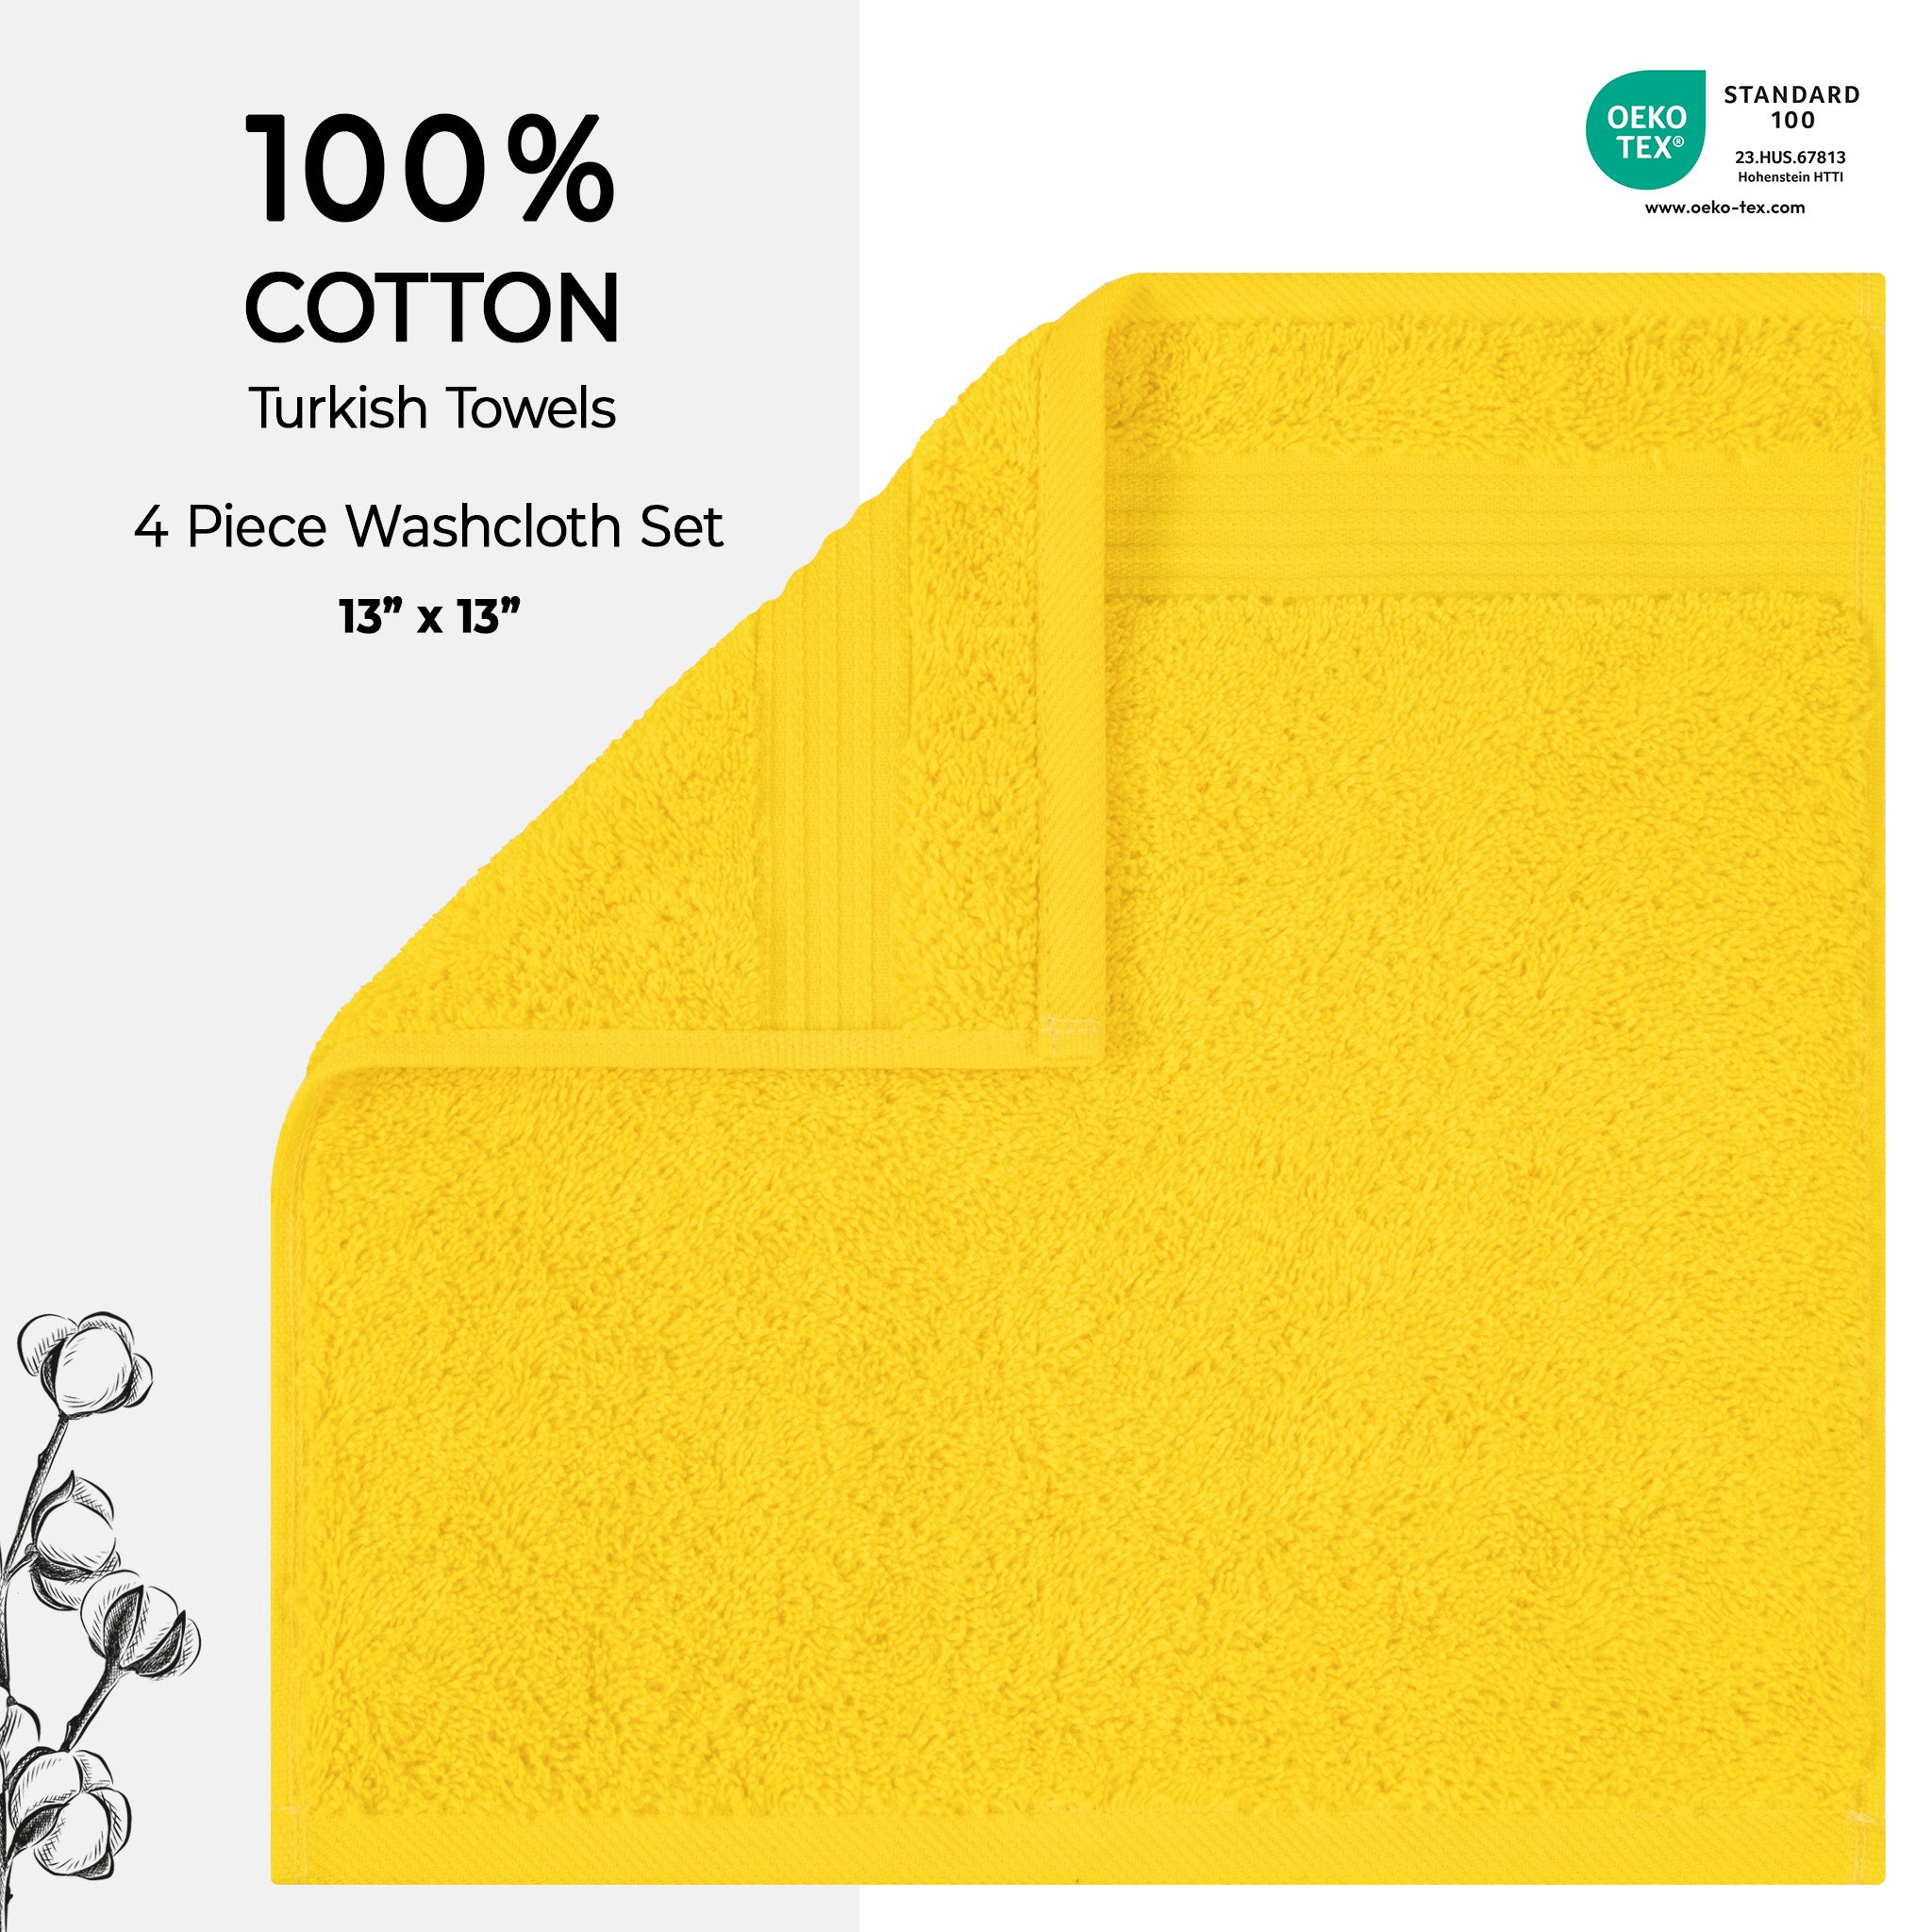 American Soft Linen Bekos 100% Cotton Turkish Towels, 4 Piece Washcloth Towel Set -yellow-02